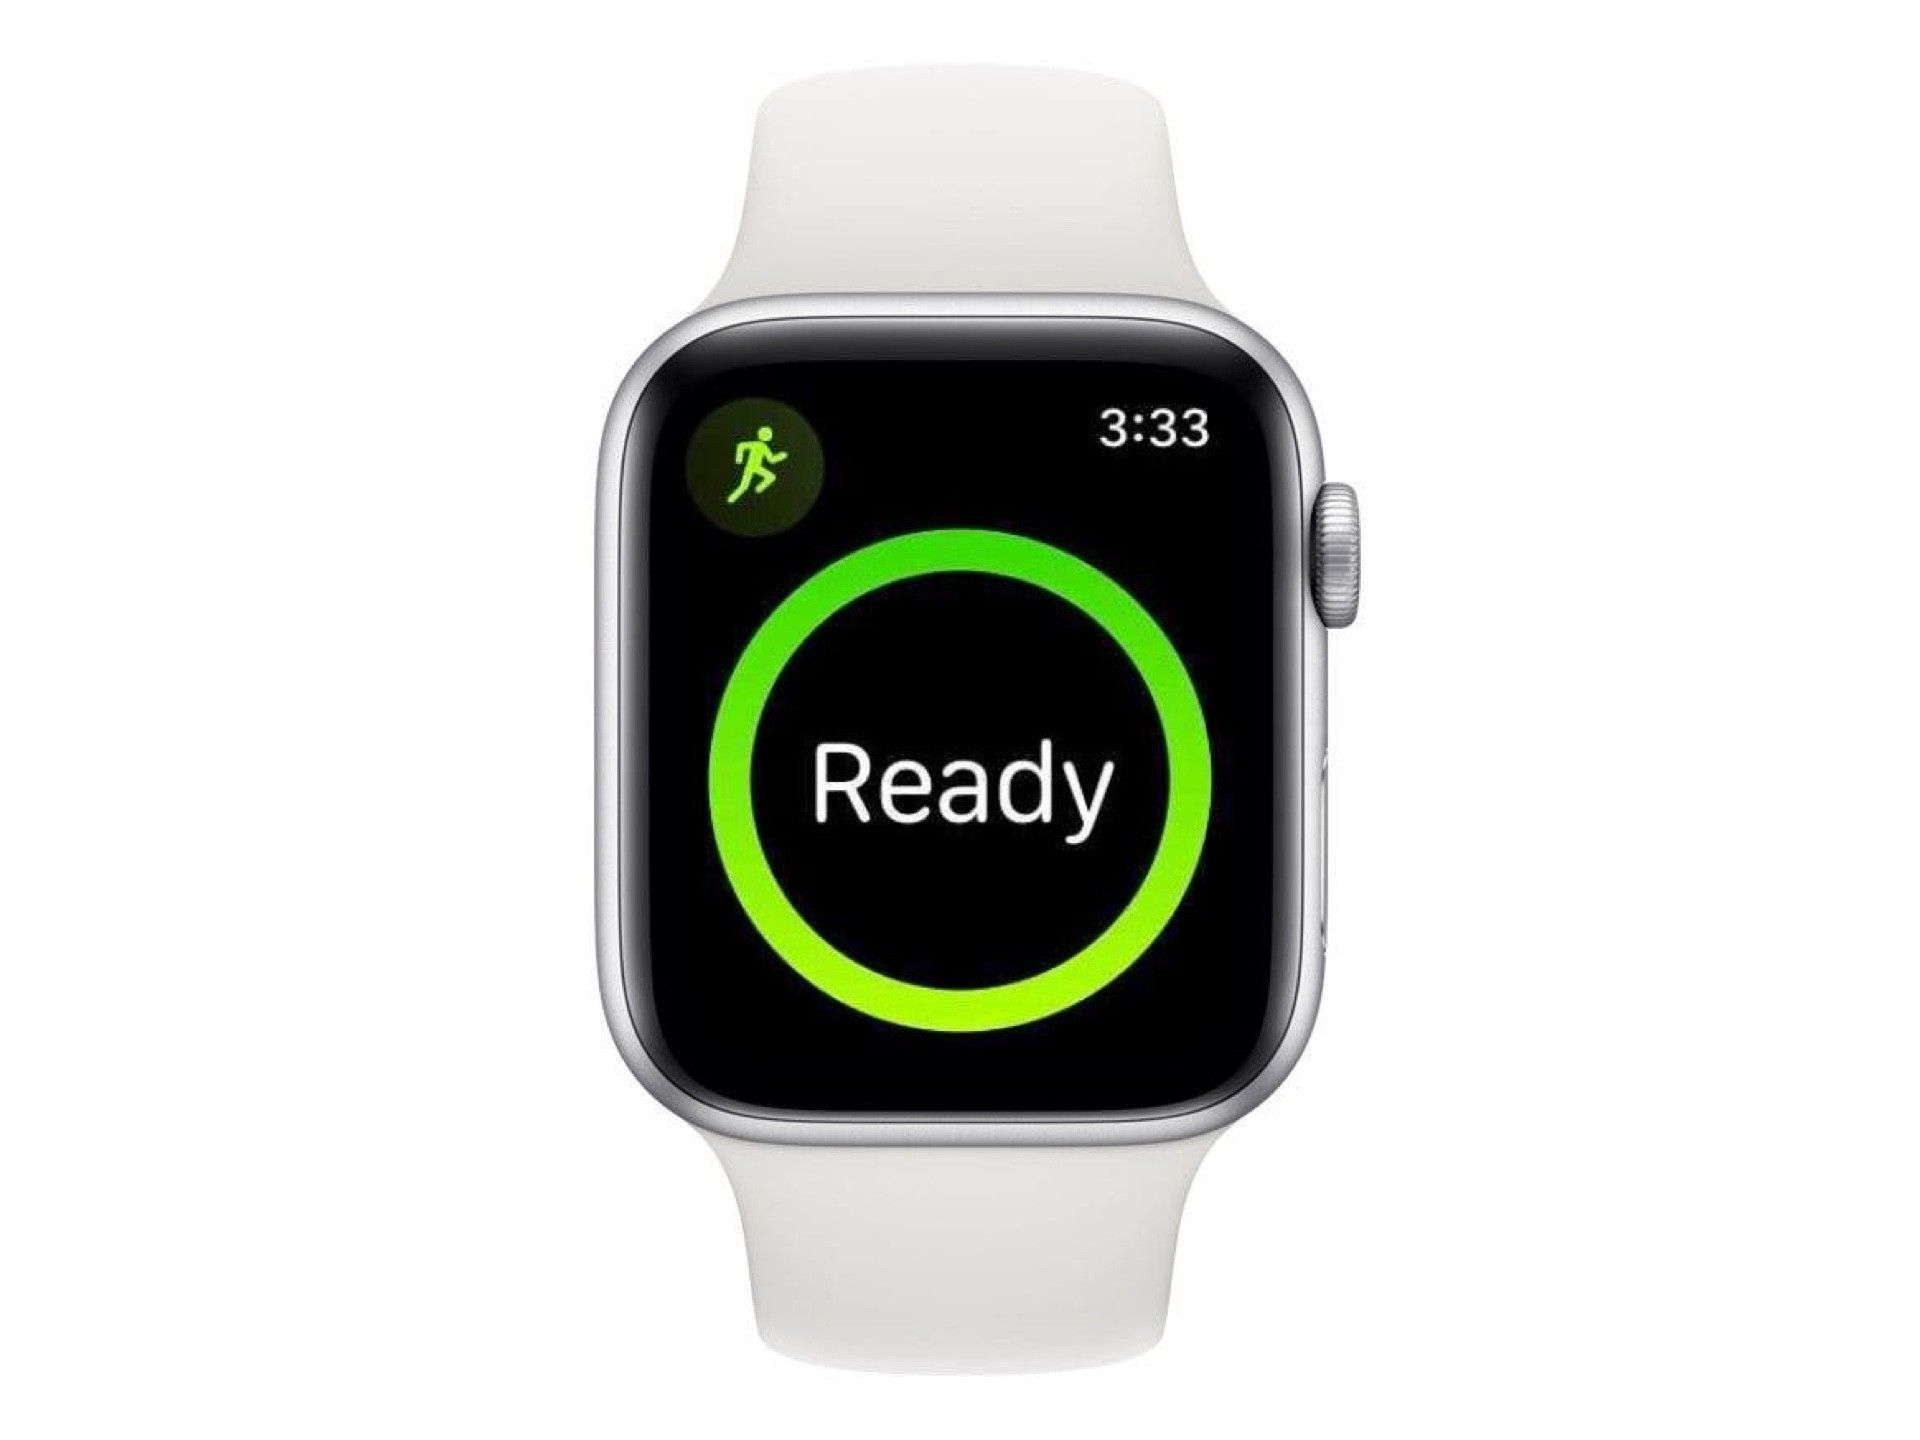 Apple Watch Workout countdown skip